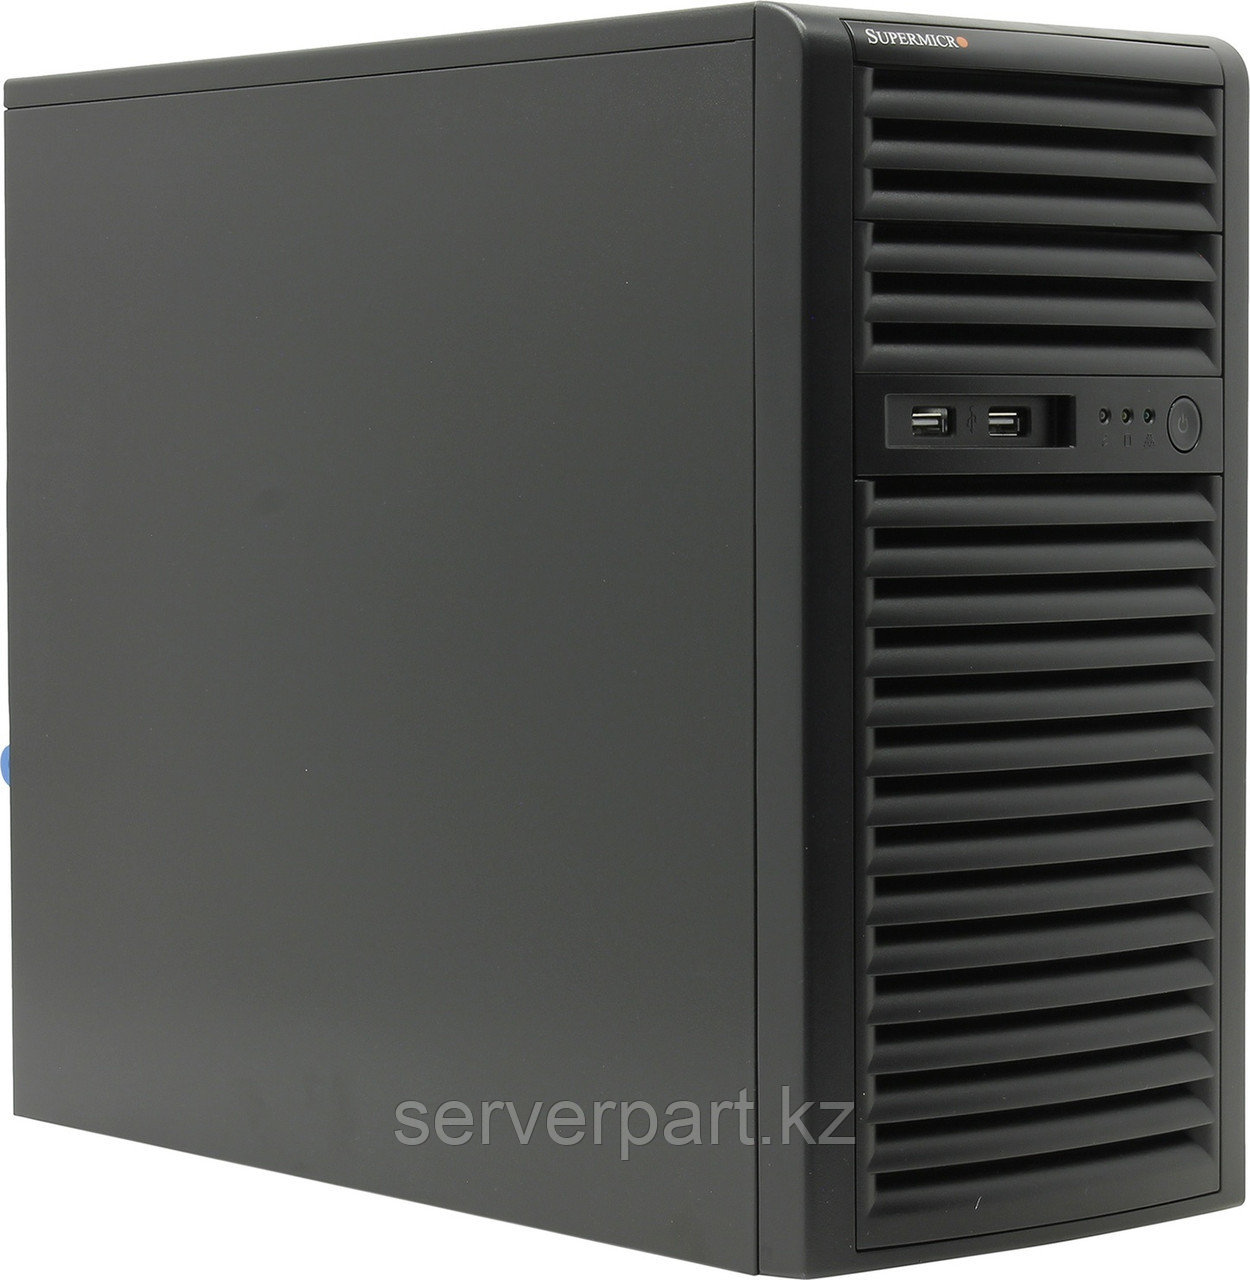 Сервер Supermicro SYS-5039C (Tower 4LFF)/4-core intel xeon E2224 (3.4GHz)/16GB UDIMM nECC